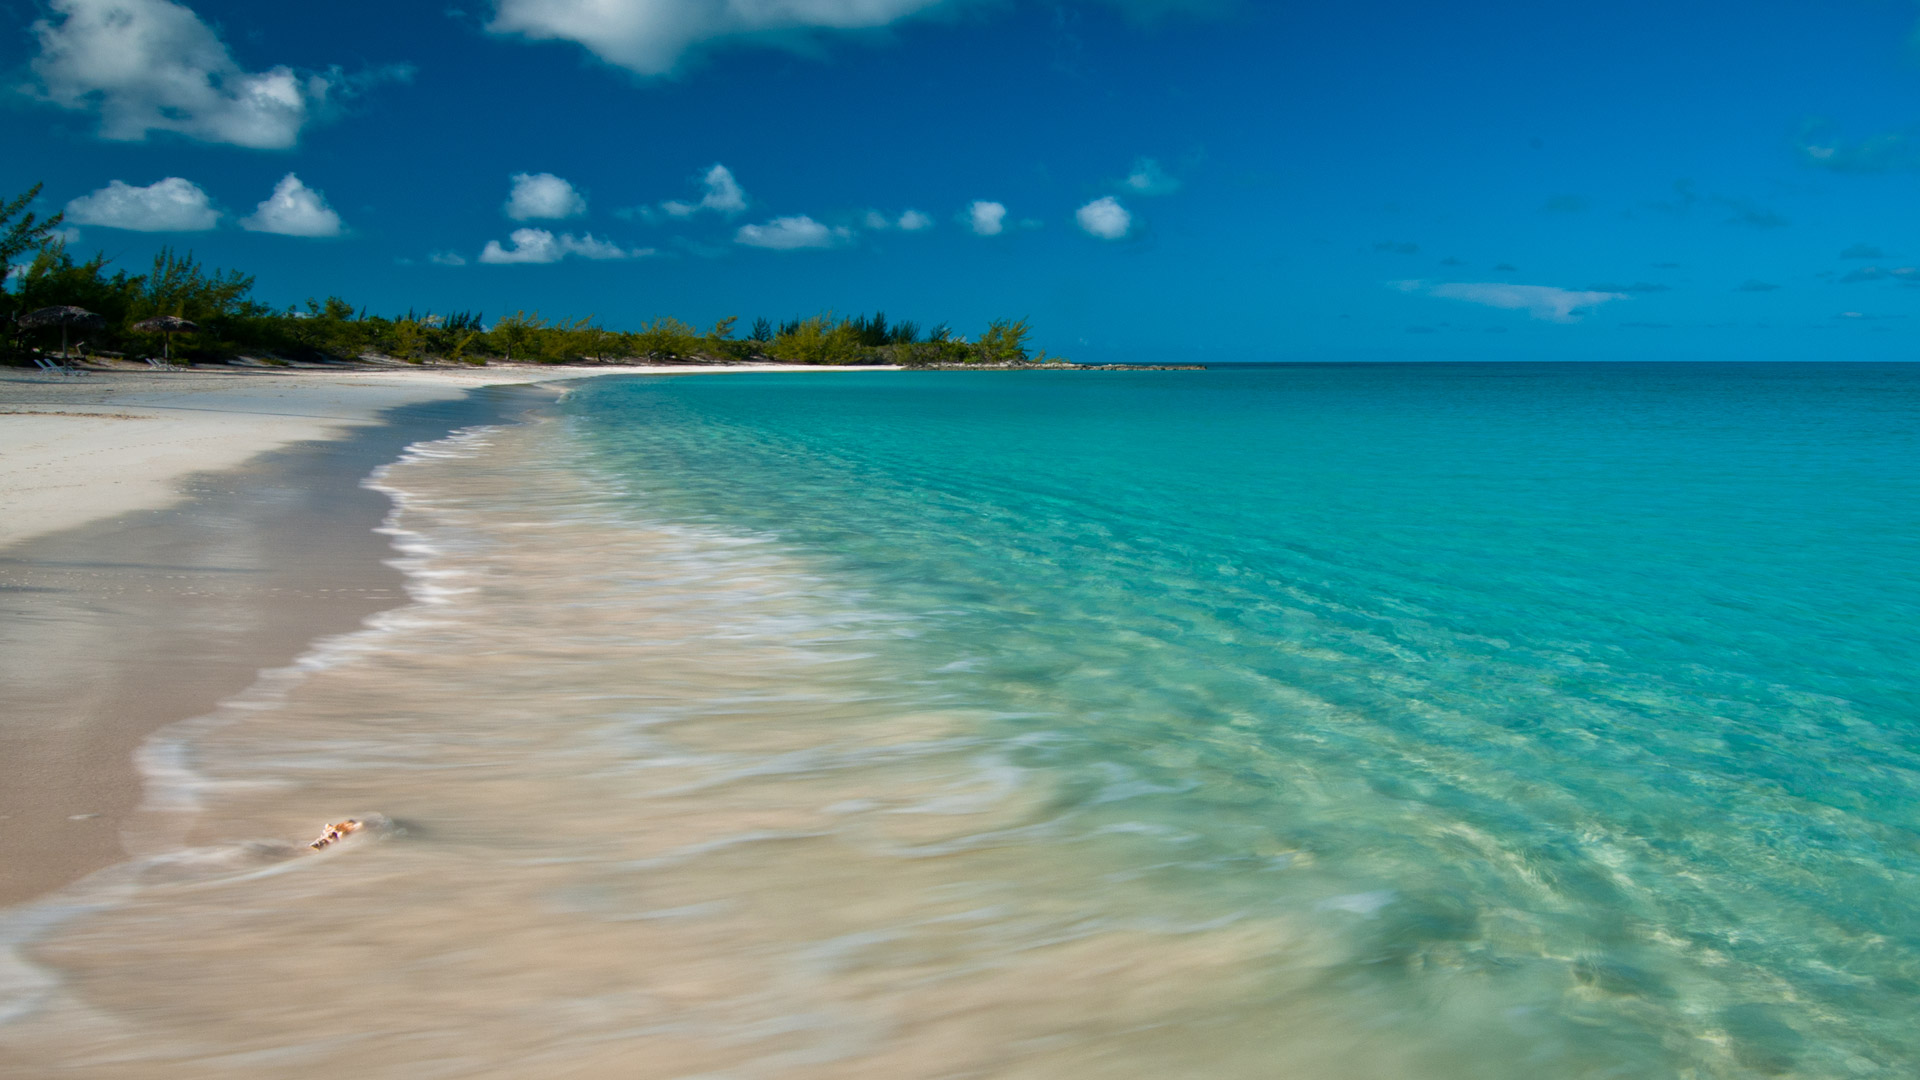 Fondo de pantalla gratuito ~ Bahamas hermosas playas | Ron Mayhew